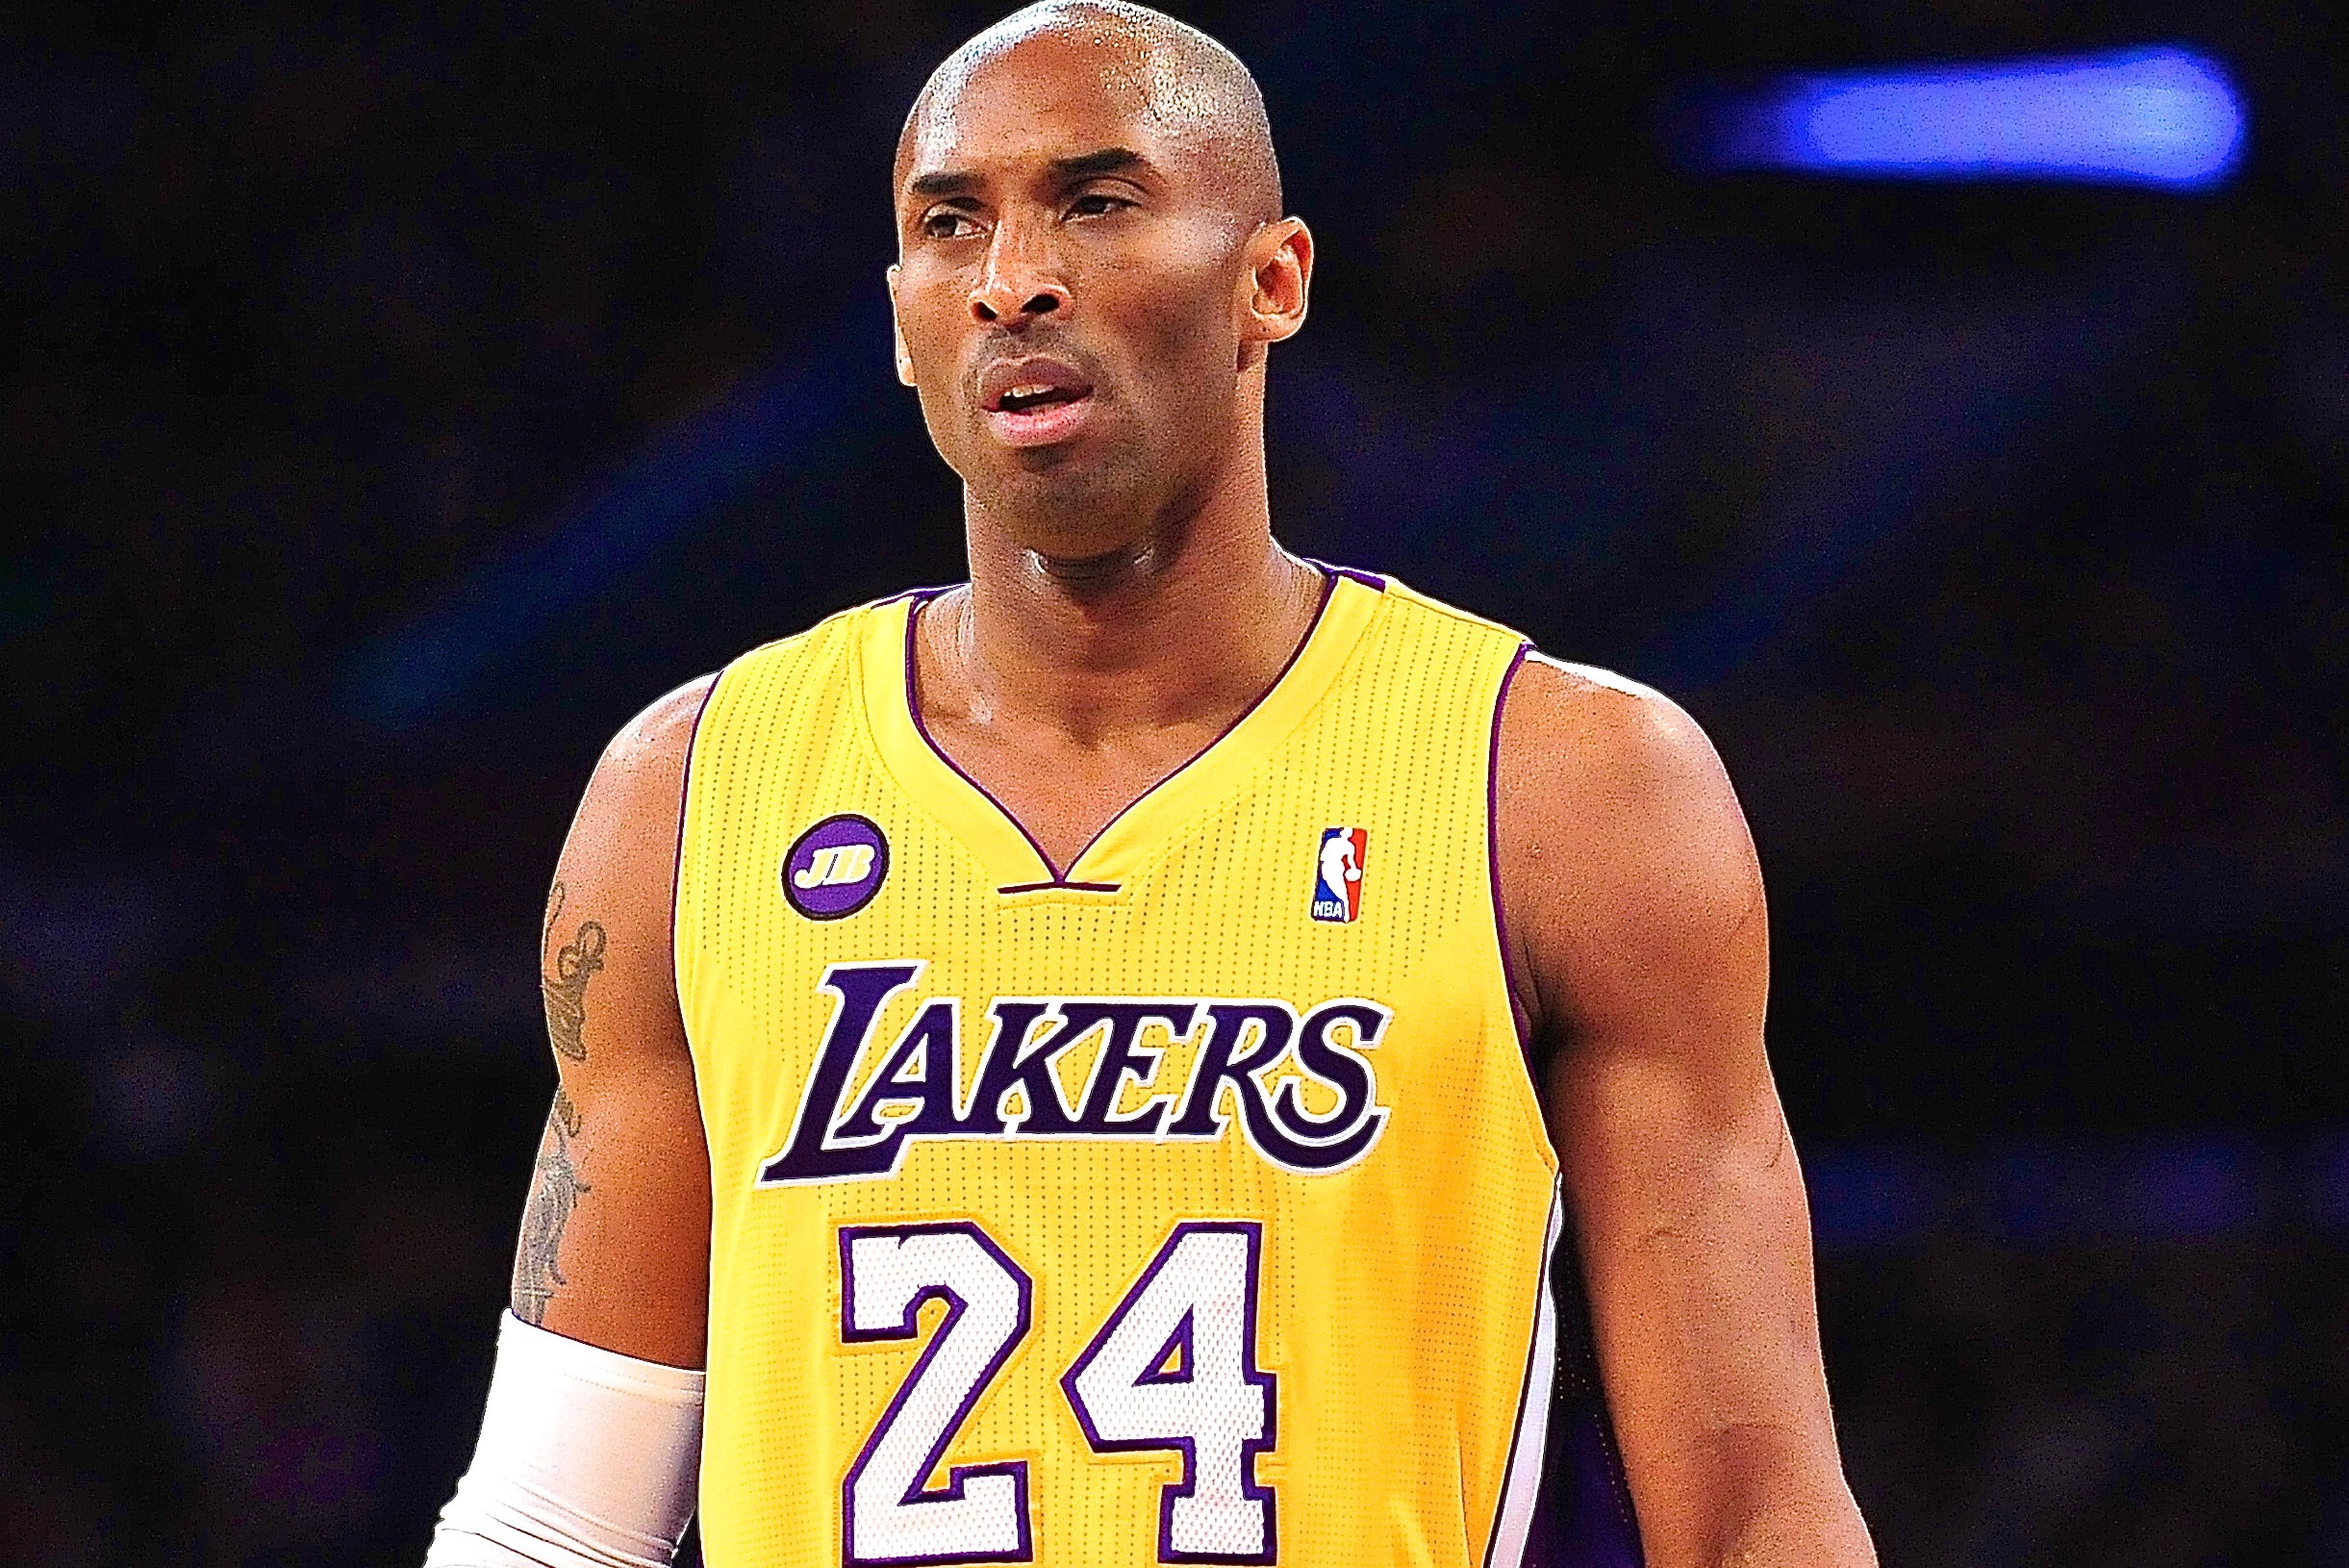 Lot Detail - 2012-13 Kobe Bryant Worn Lakers Pre-Game Warm-Up